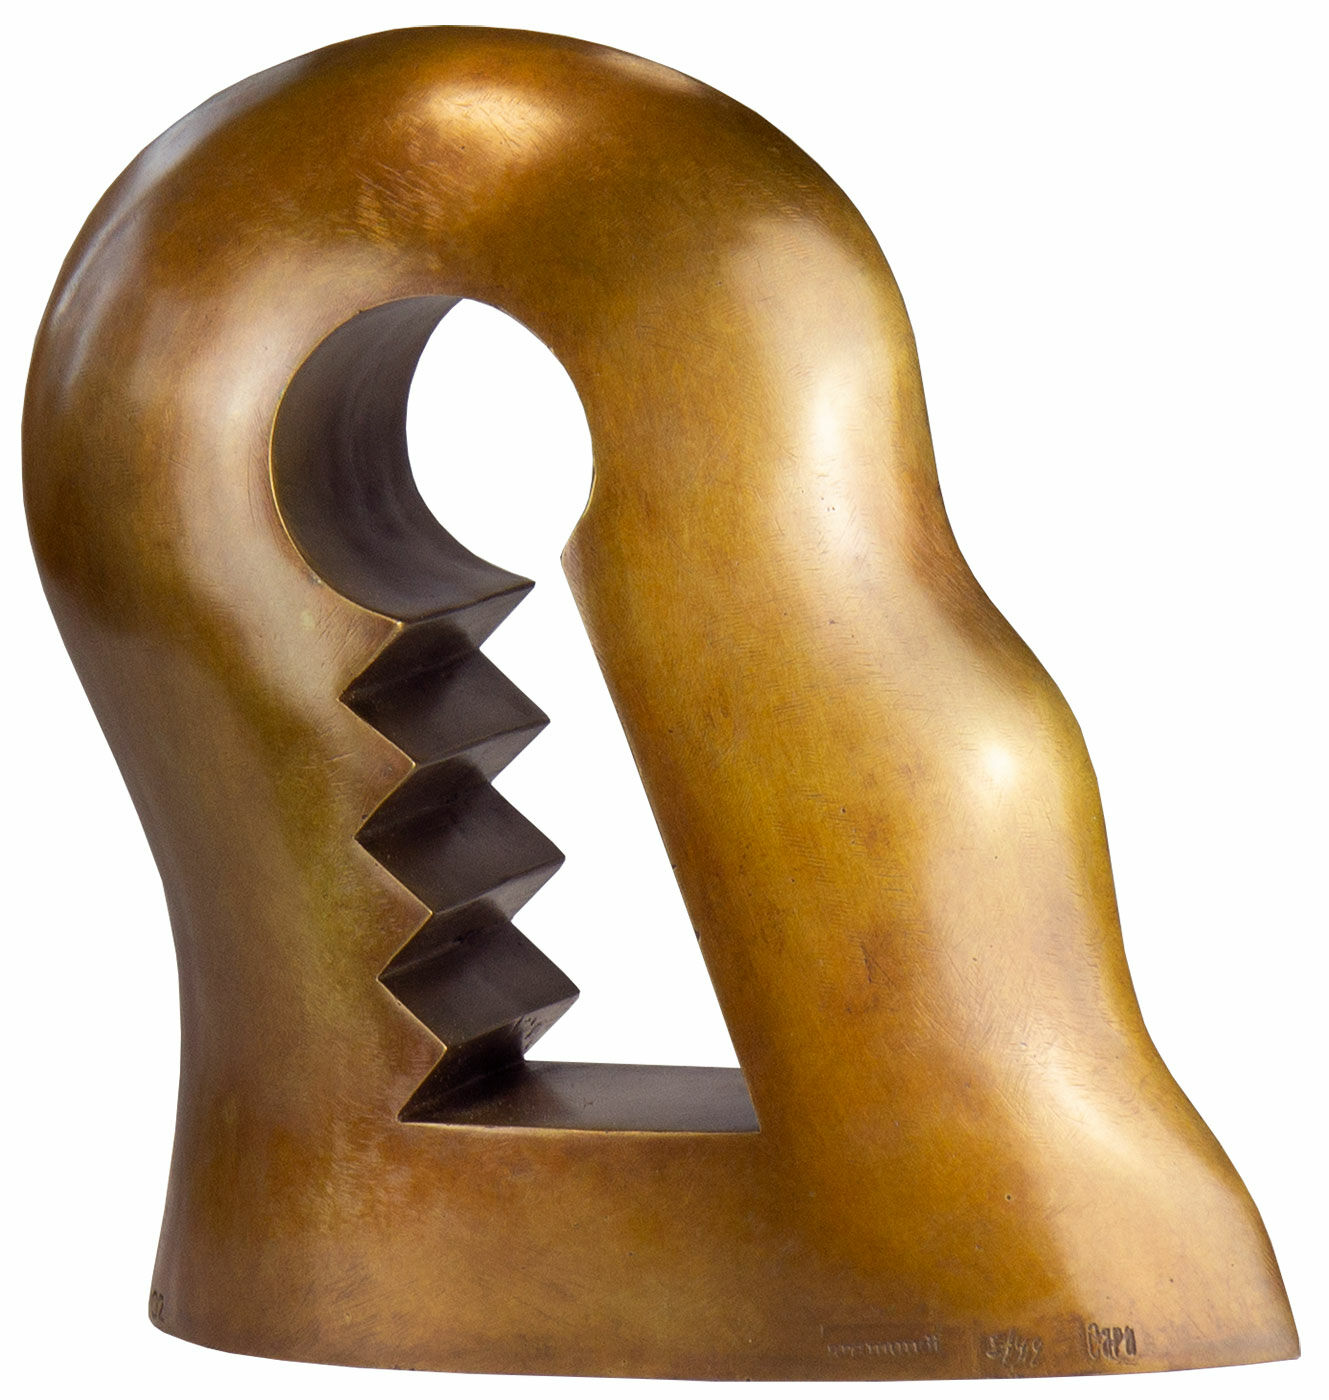 Sculpture "Keyhole", bronze by Hans Otto Lohrengel